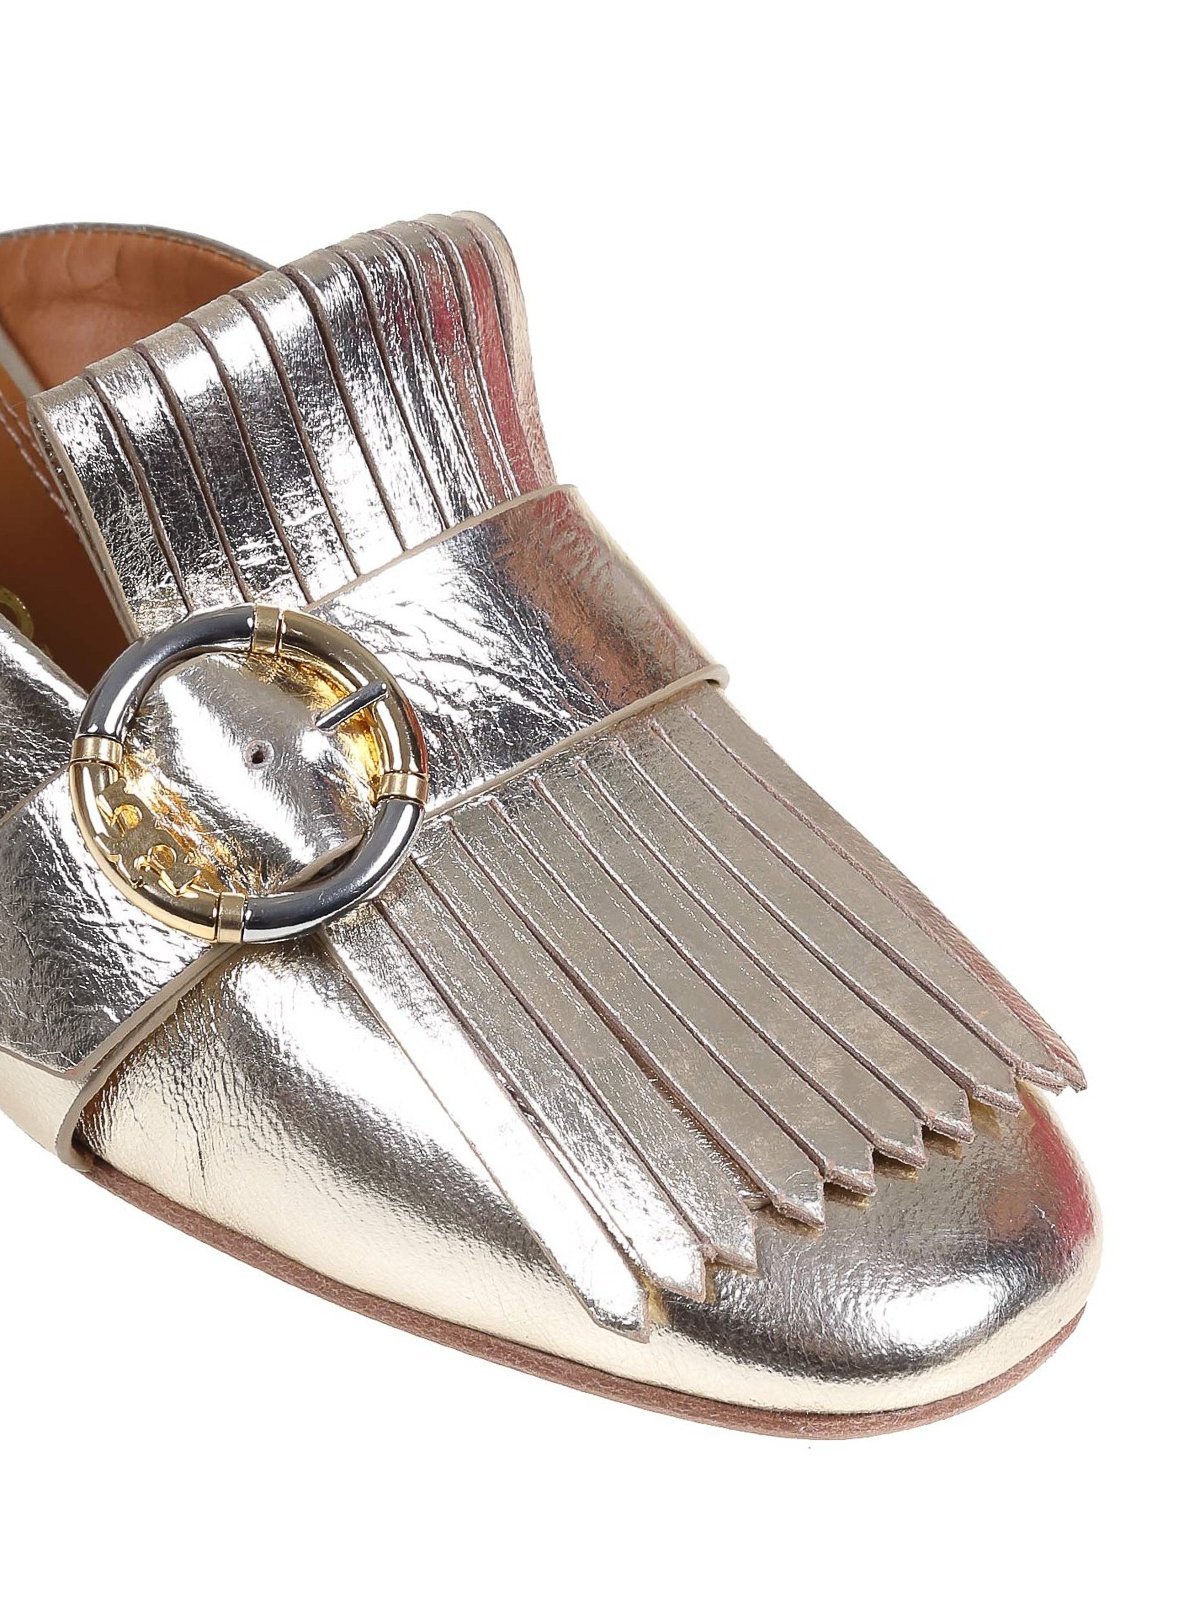 Mules shoes Tory Burch - Kiltie mules - 86852702 | Shop online at iKRIX